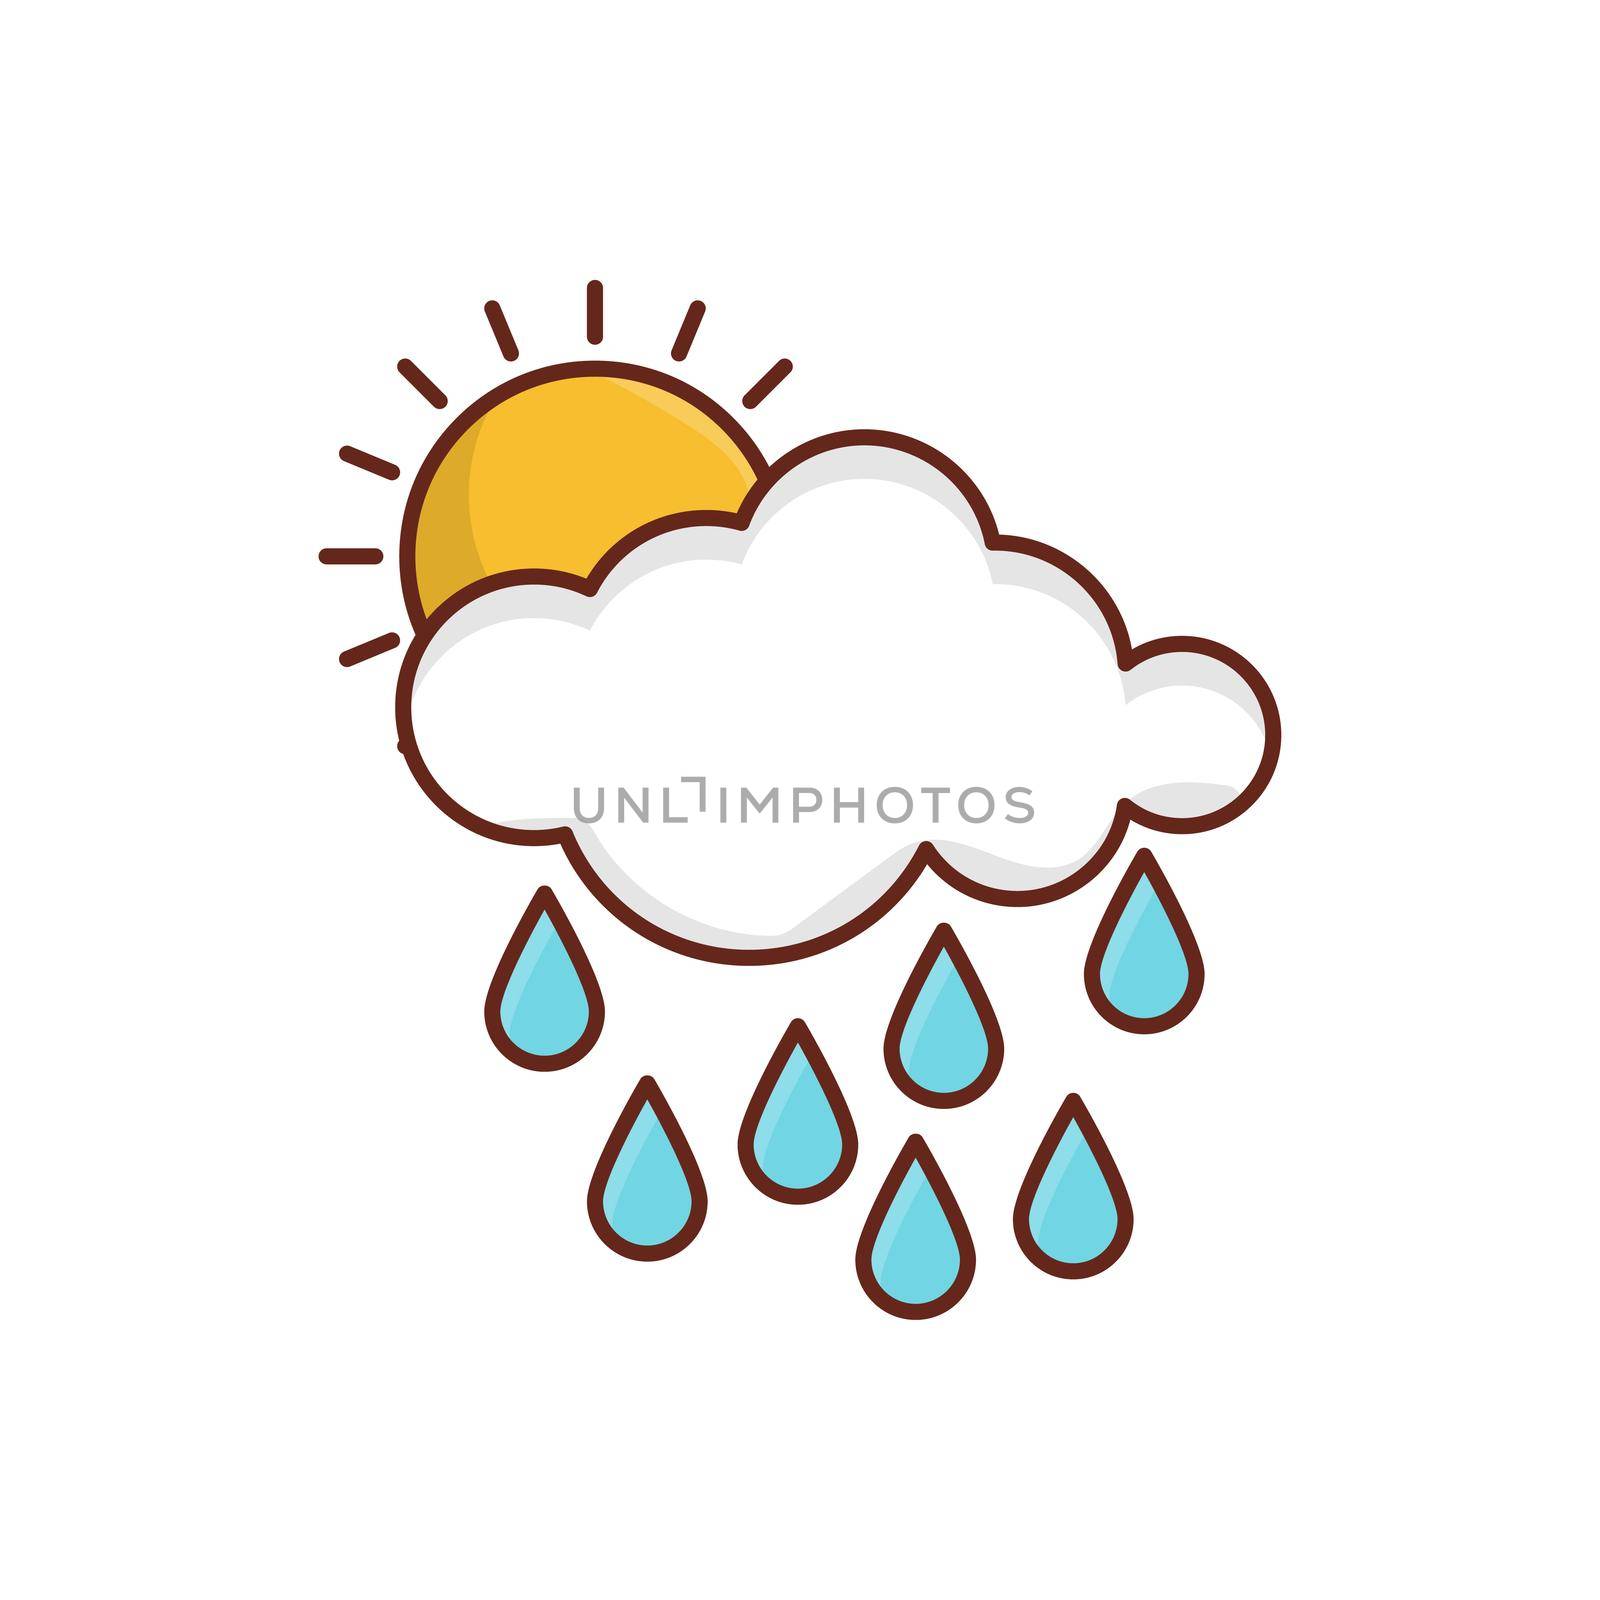 rain vector flat colour icon